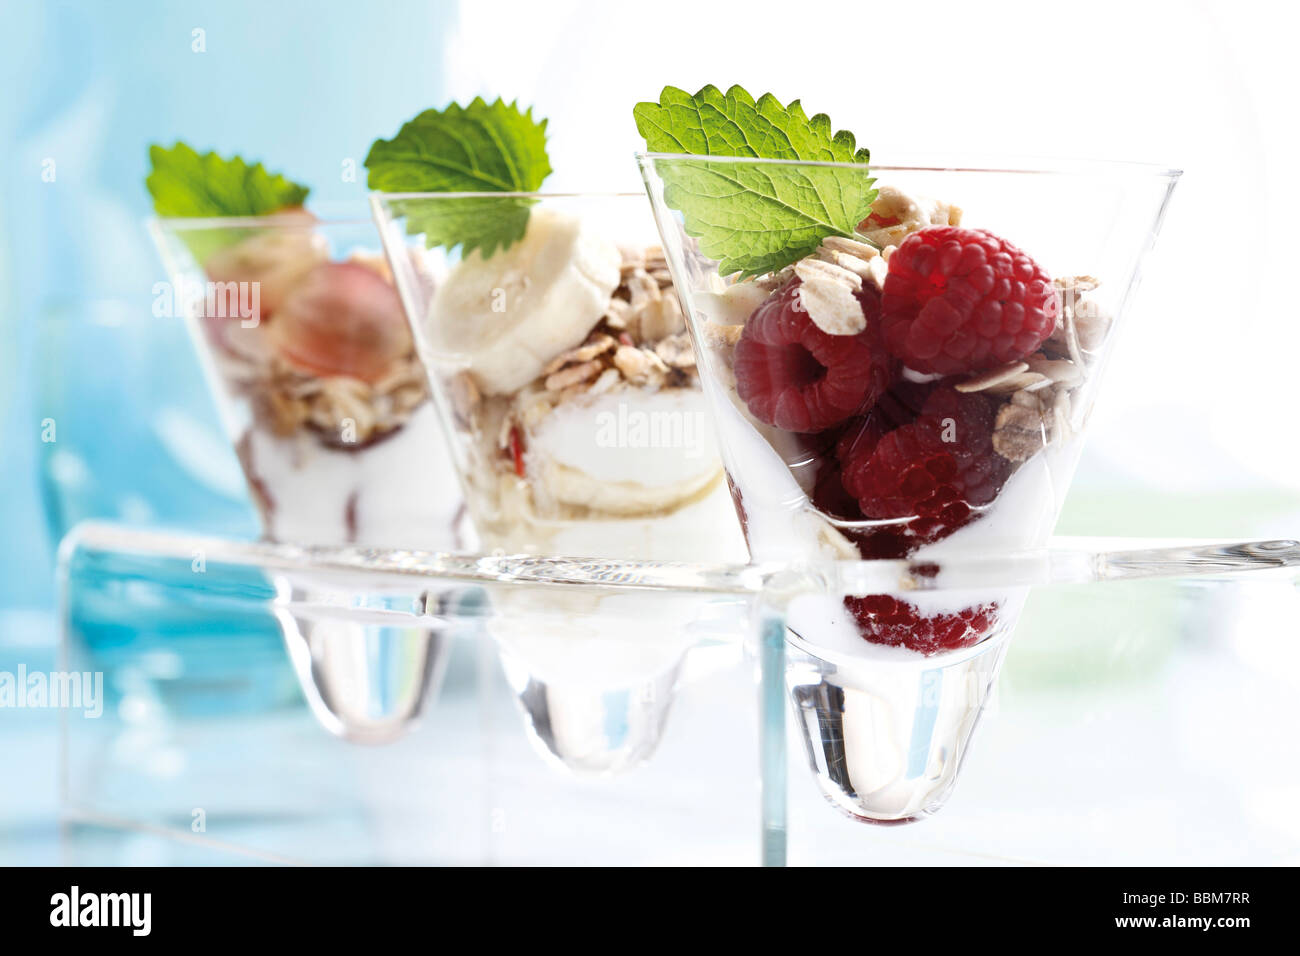 Muesli with yoghurt in a small glass jar, raspberries, sliced banana, grapes, mint leafs Stock Photo